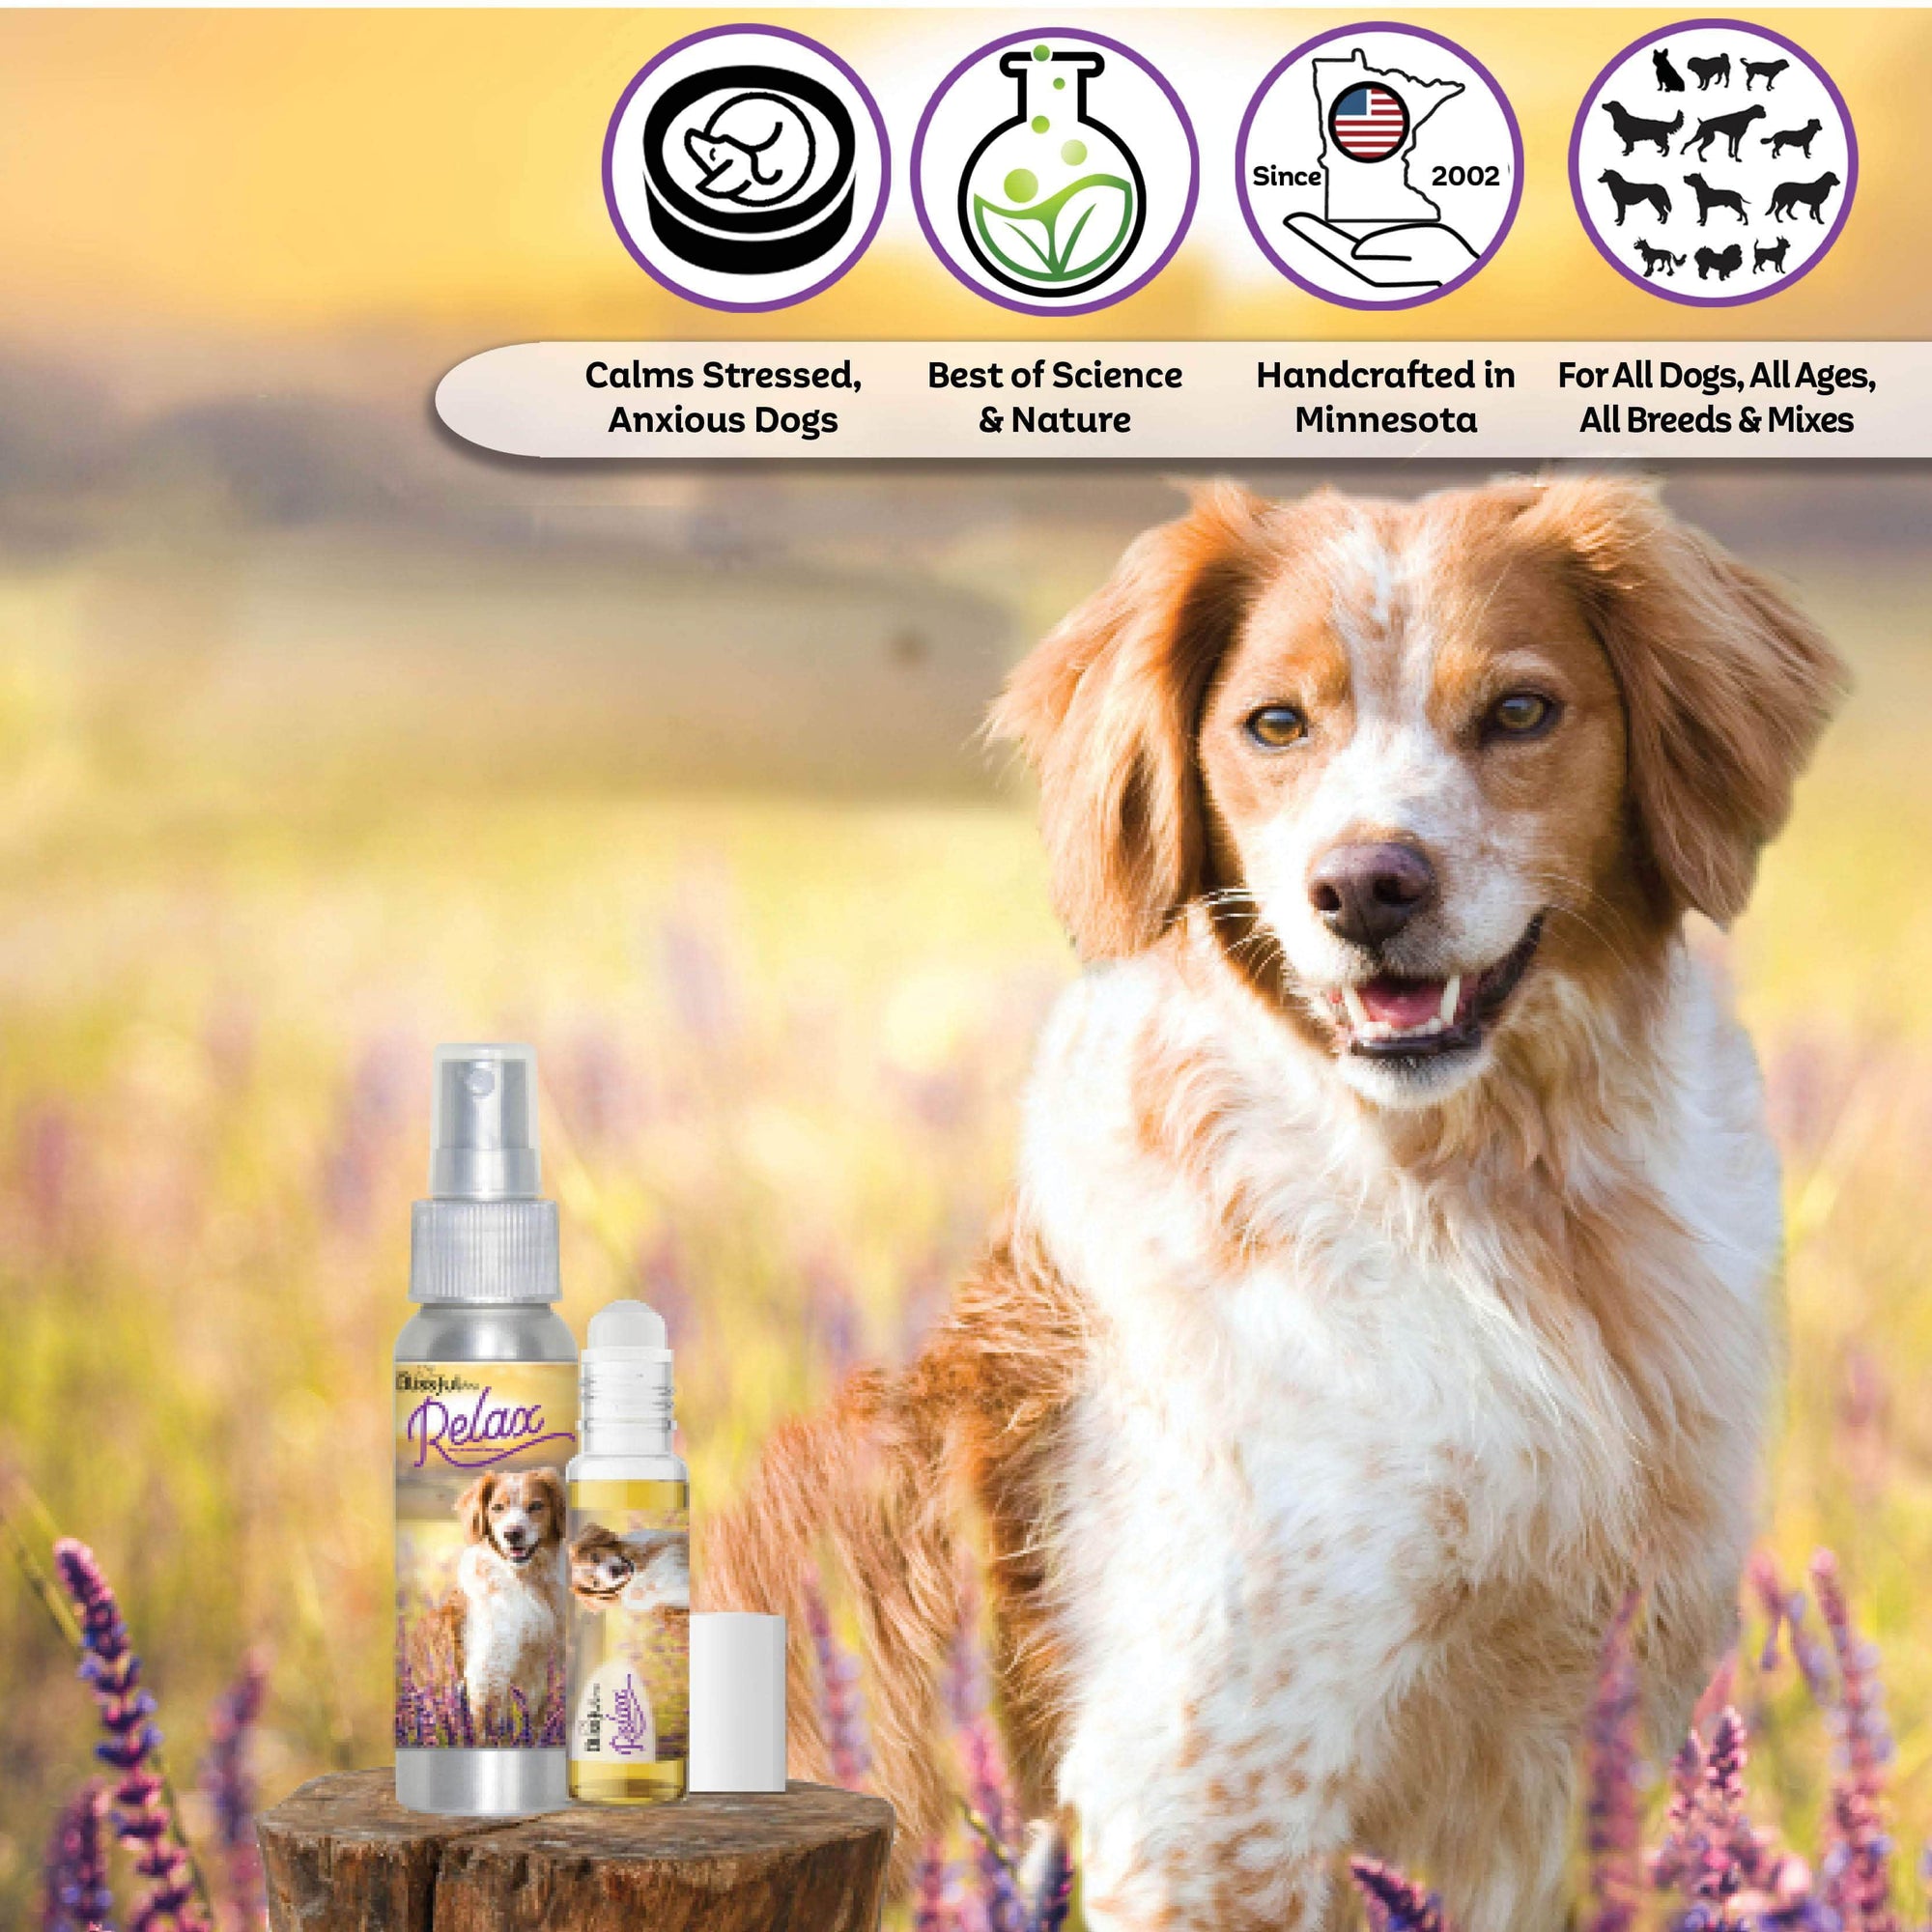 Brittany dog aromatherapy